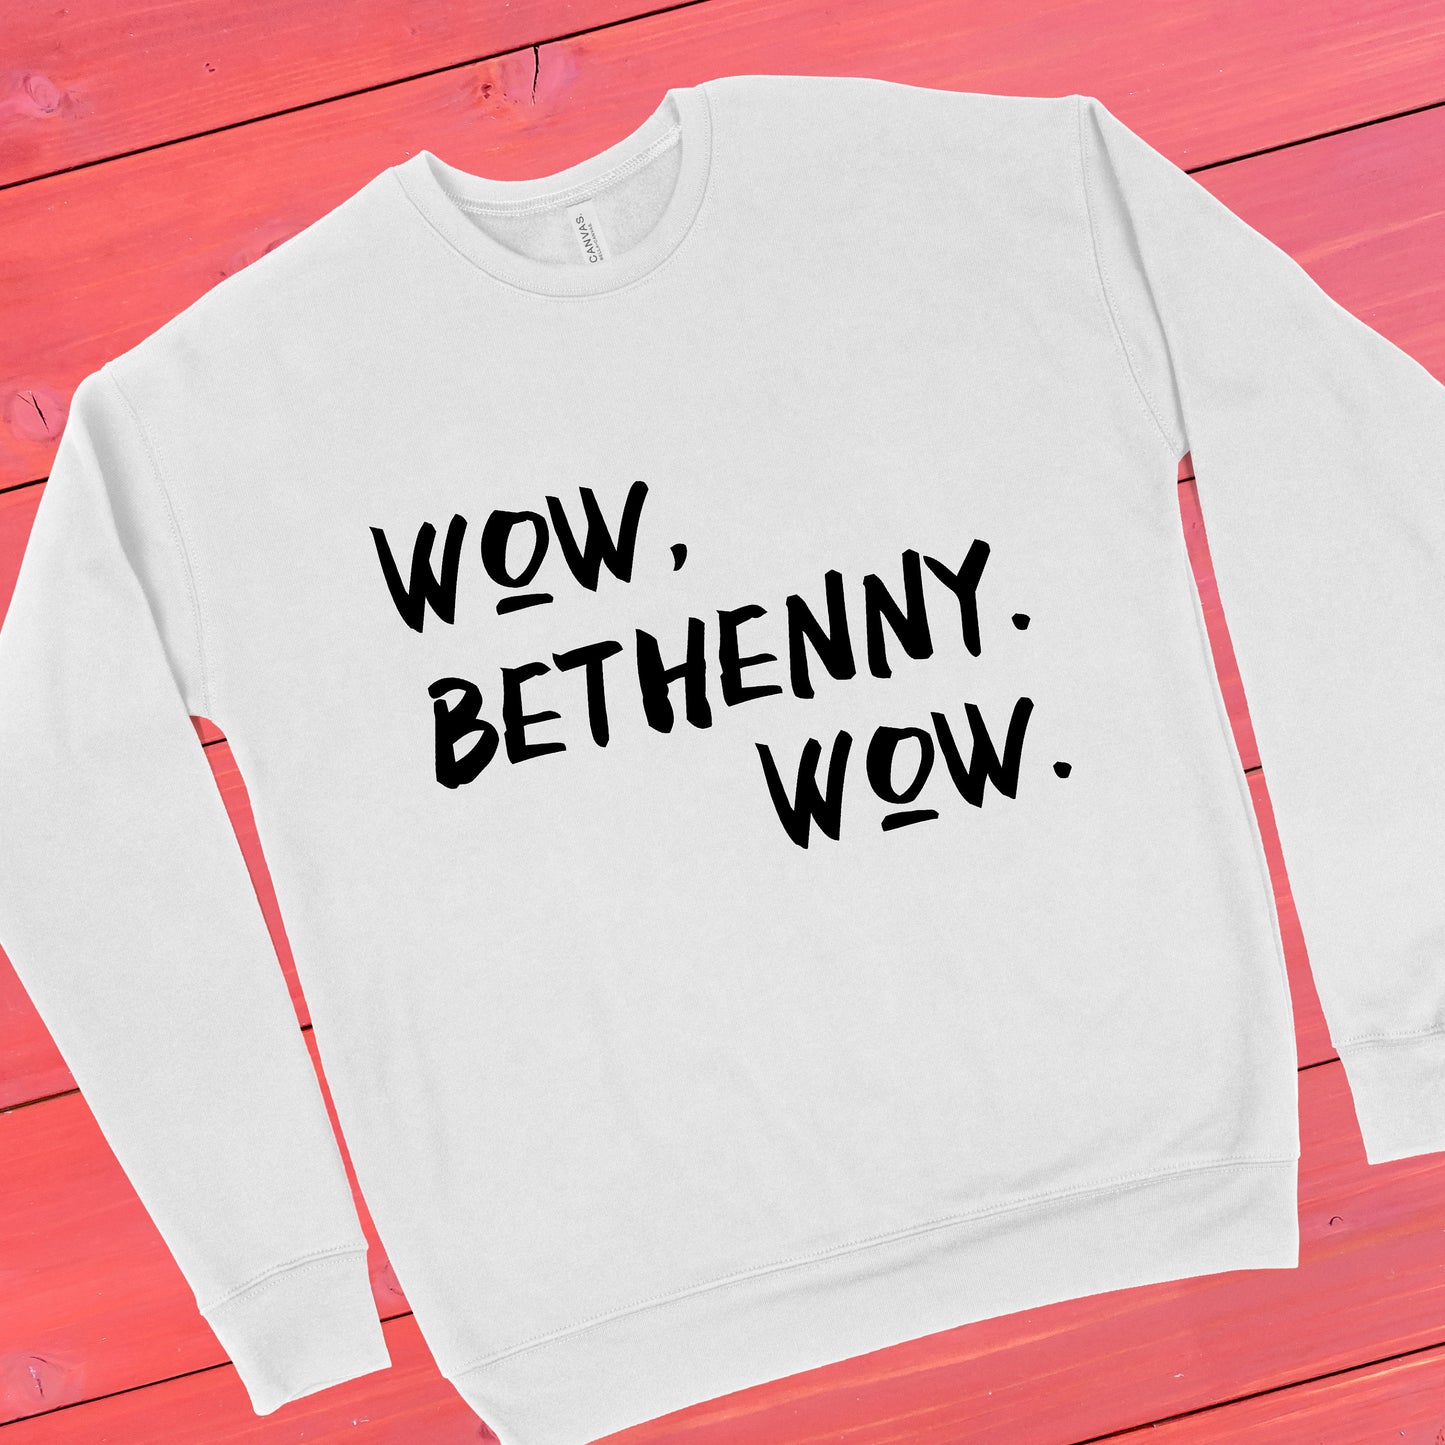 Wow, Bethenny. Wow. | RHONY Sweatshirt